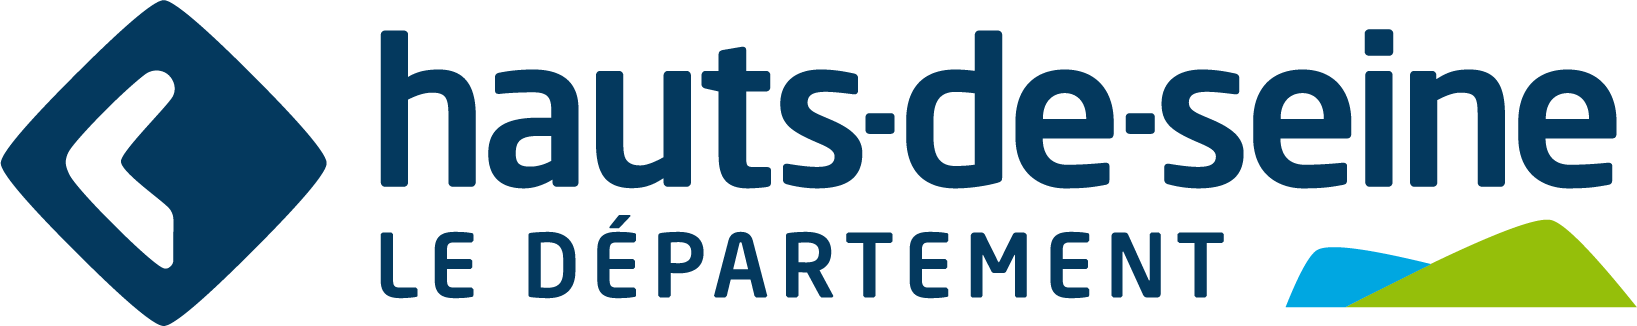 logo hauts-de-seine